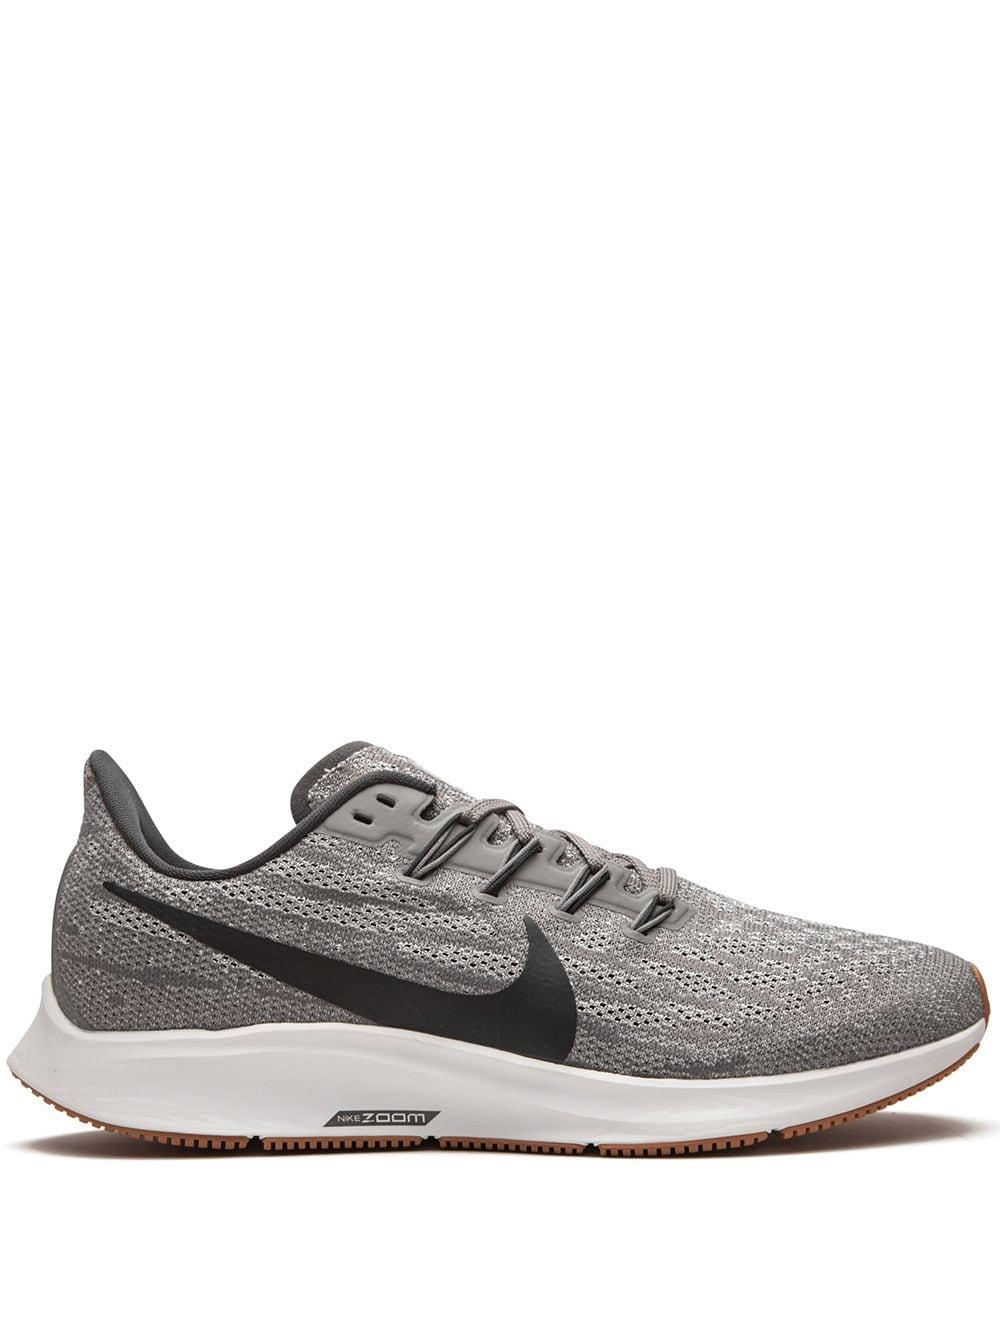 Nike Air Zoom Pegasus 36 Running Shoe in Grey (Gray) for Men - Save 40% -  Lyst